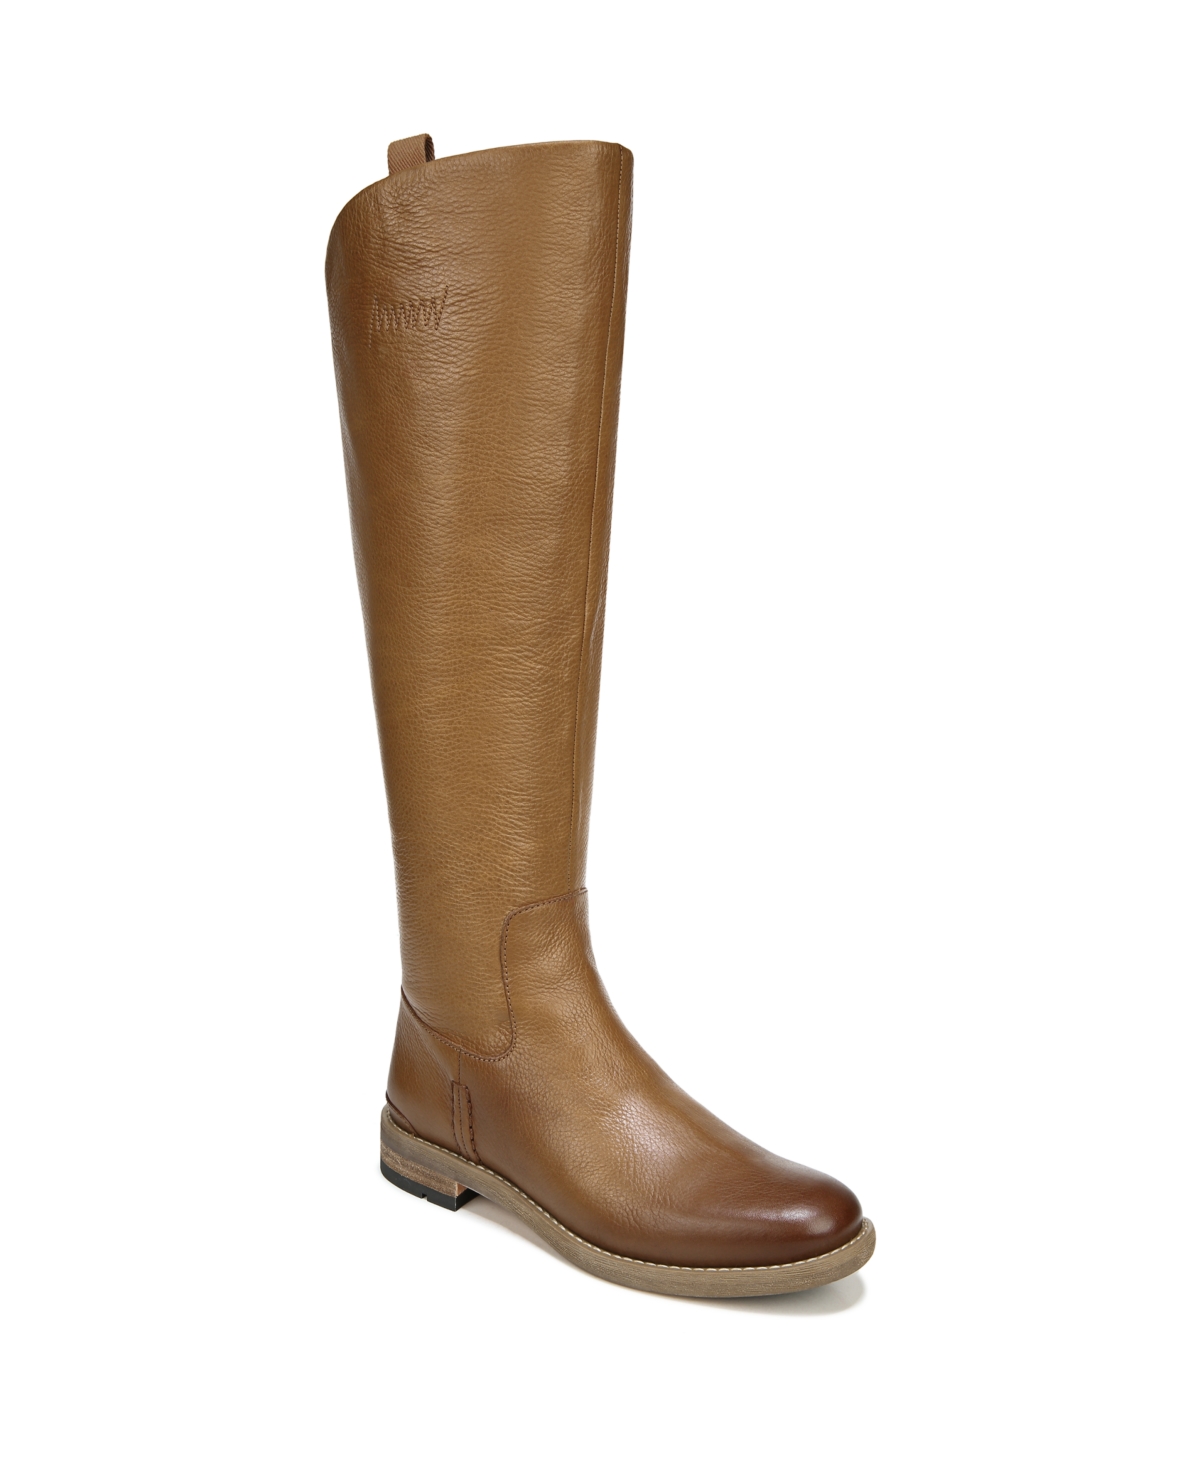 Meyer Narrow Calf Knee High Riding Boots - Tan Leather